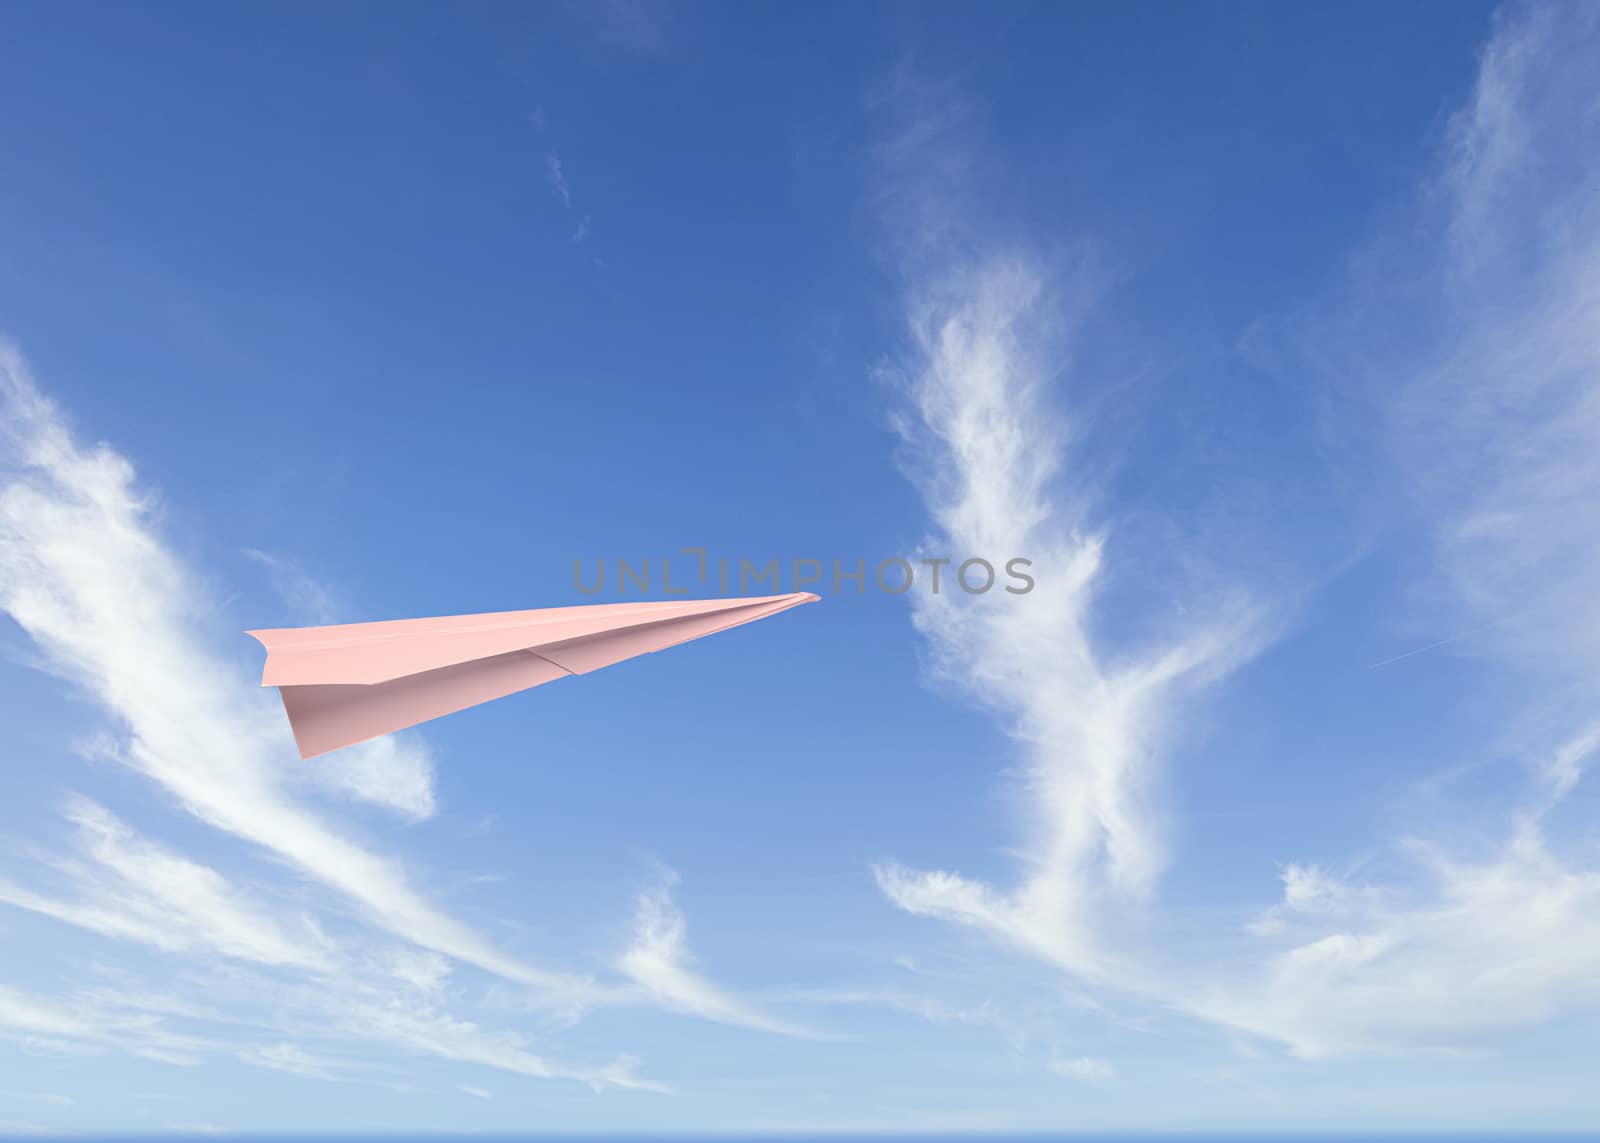 a paper plane flies in a cloudy sky